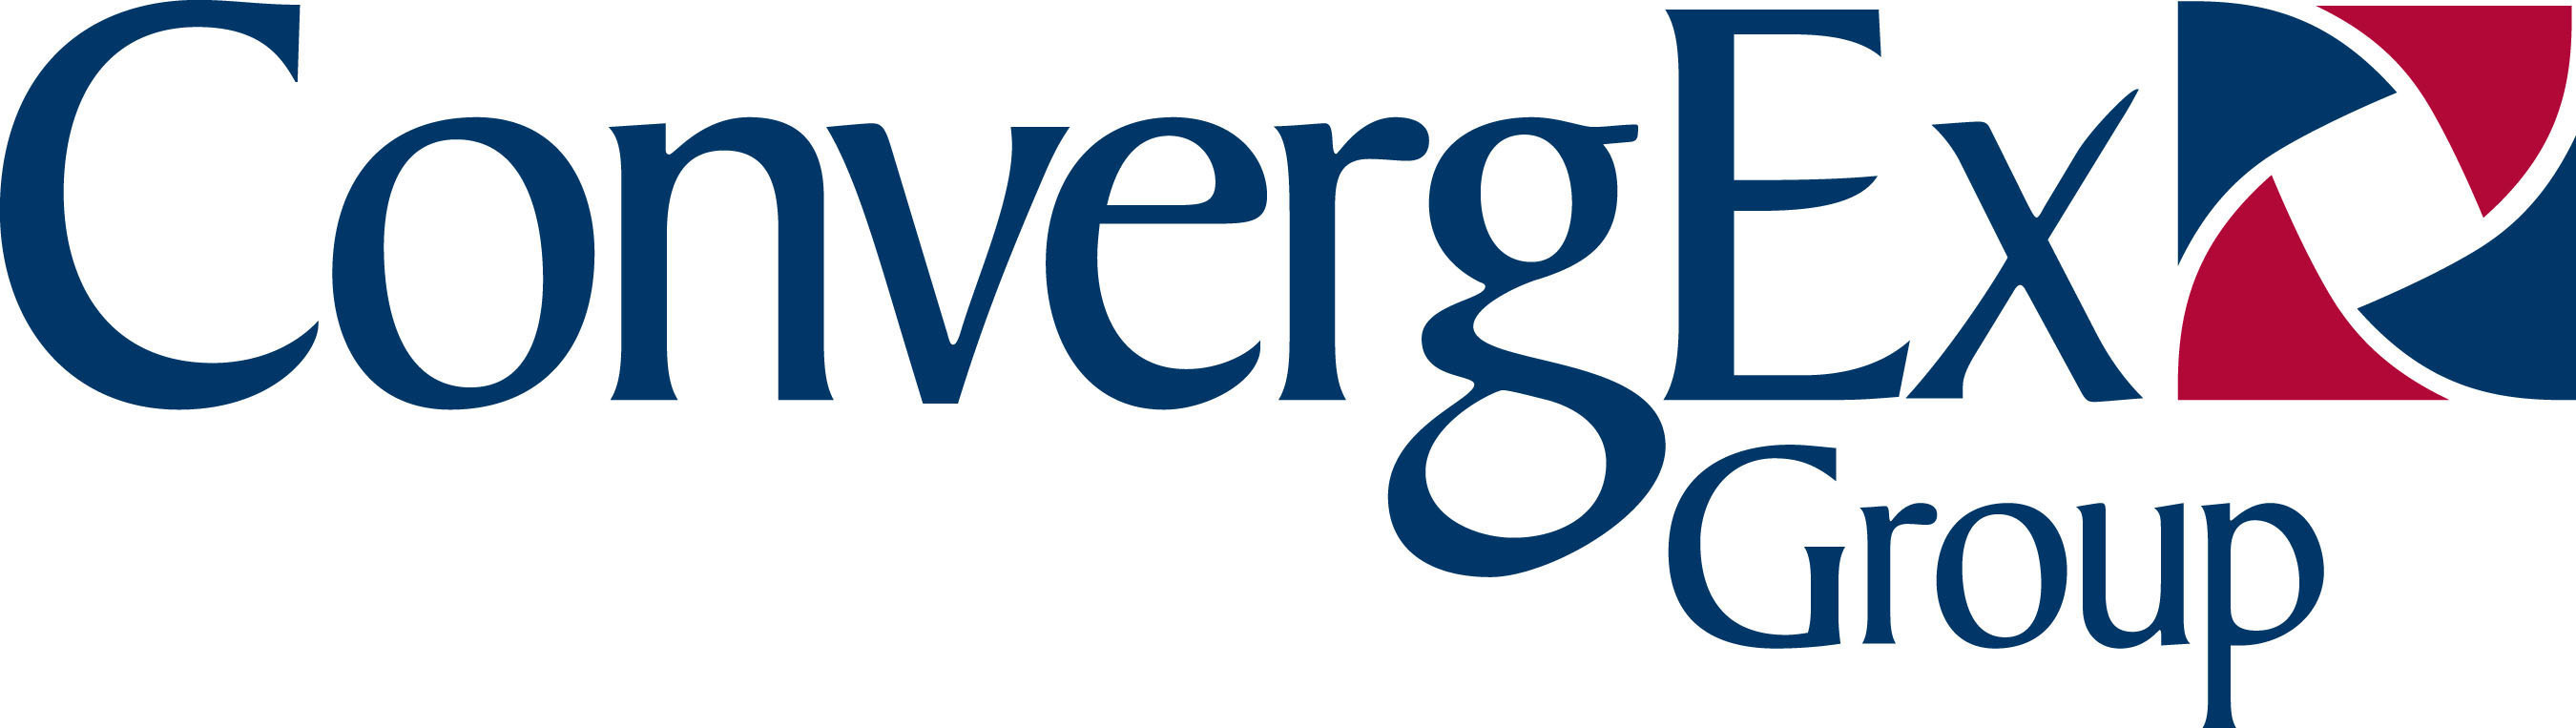 ConvergEx Group Logo (PRNewsFoto/ConvergEx Group) (PRNewsFoto/ConvergEx Group)